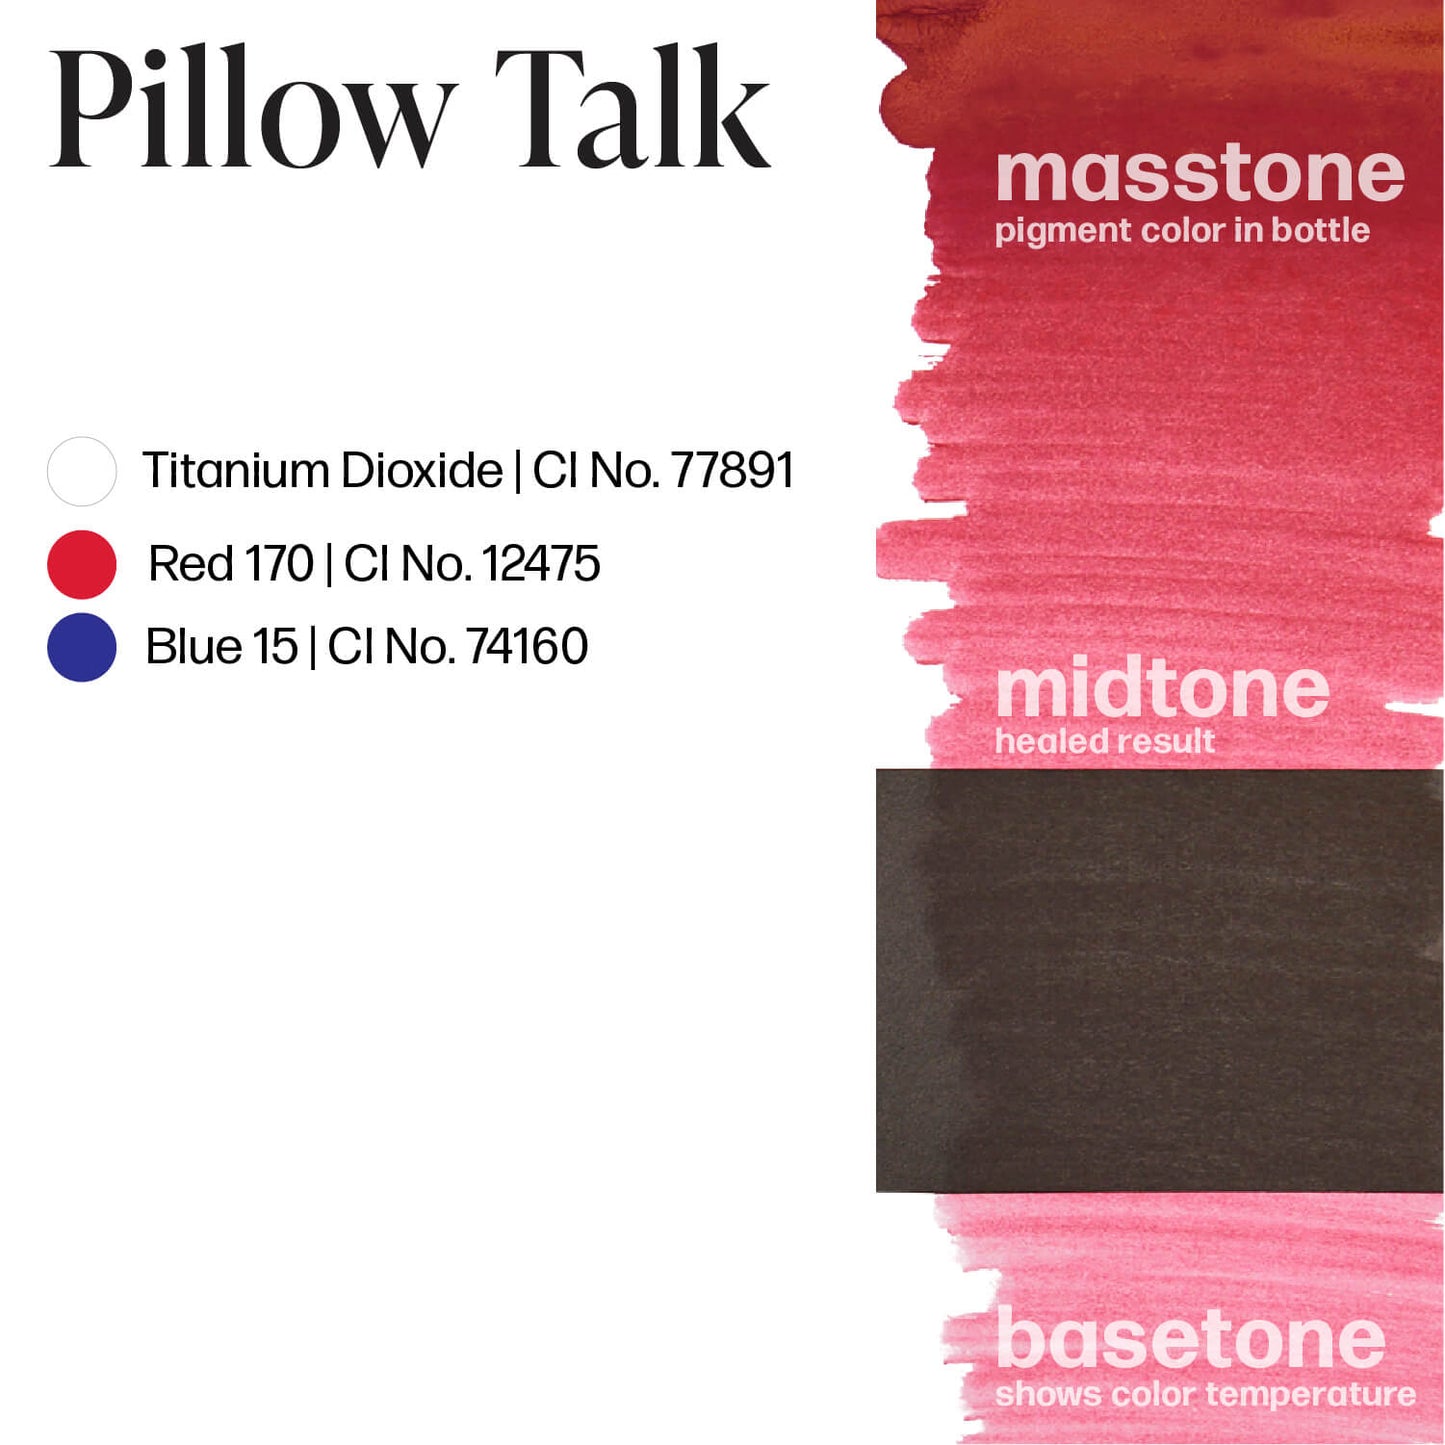 Perma Blend Pillow Talk Lip Blush Ink Drawdown Masstone Midtone Basetone